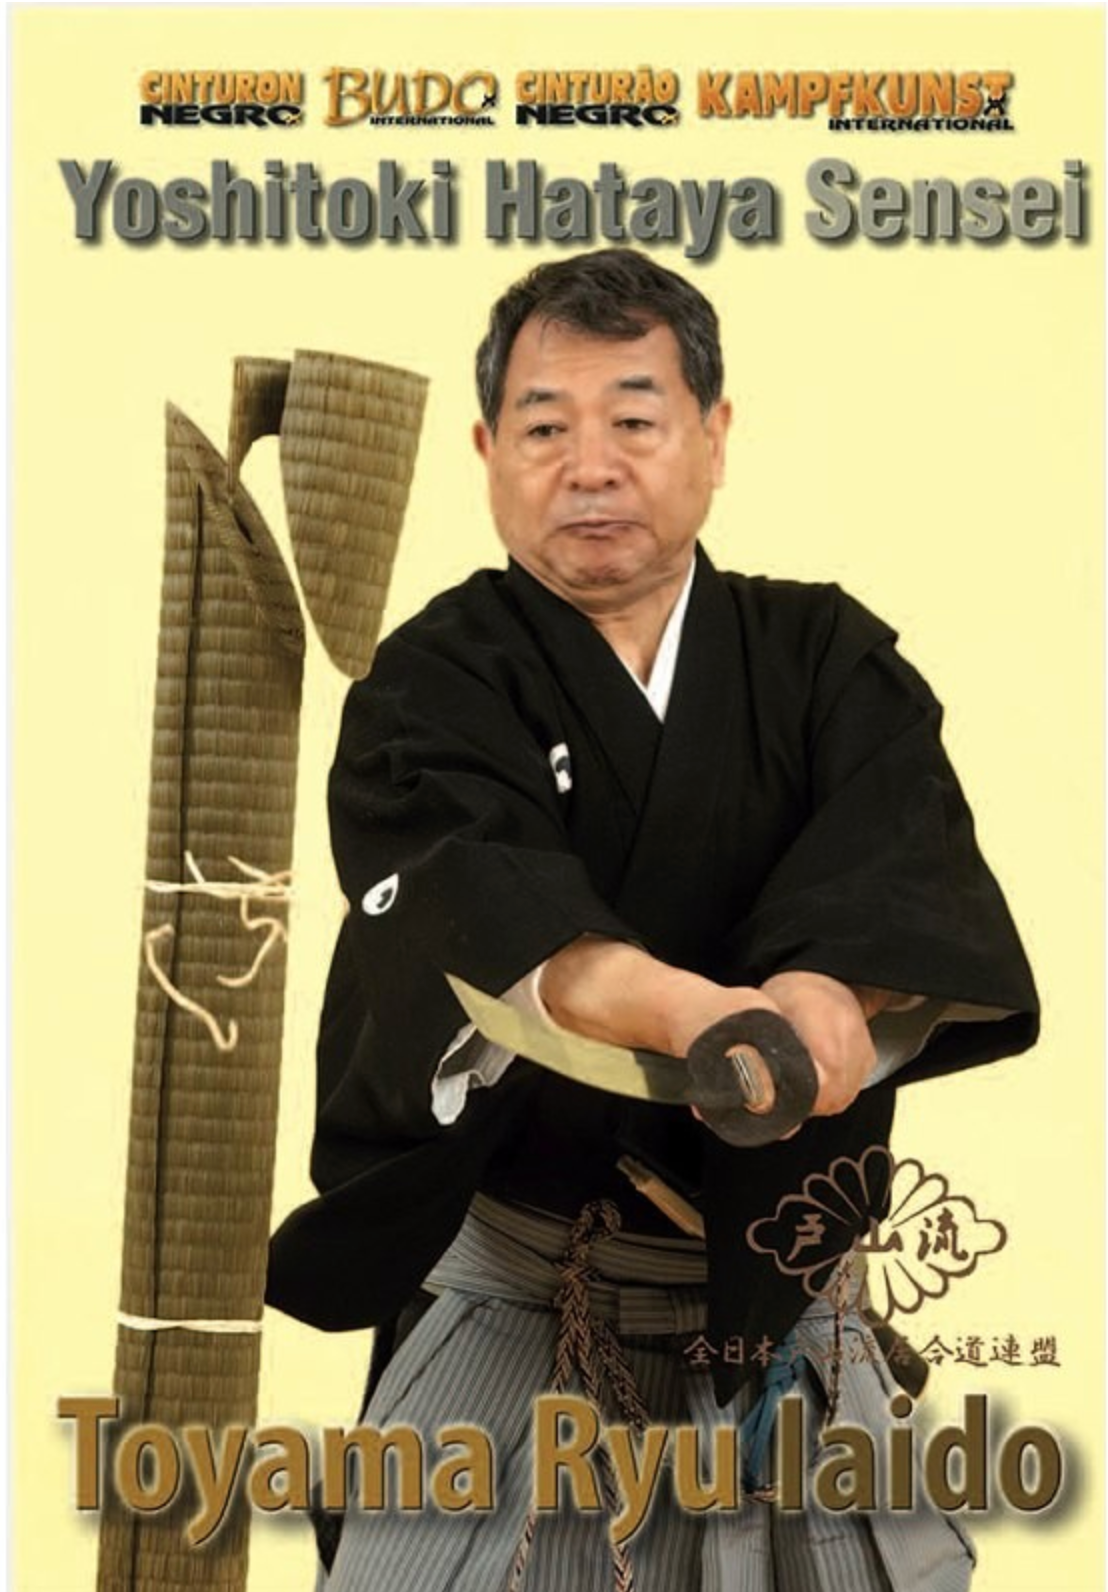 Toyama Ryu Iaido DVD by Yoshitoki Hataya - Budovideos Inc